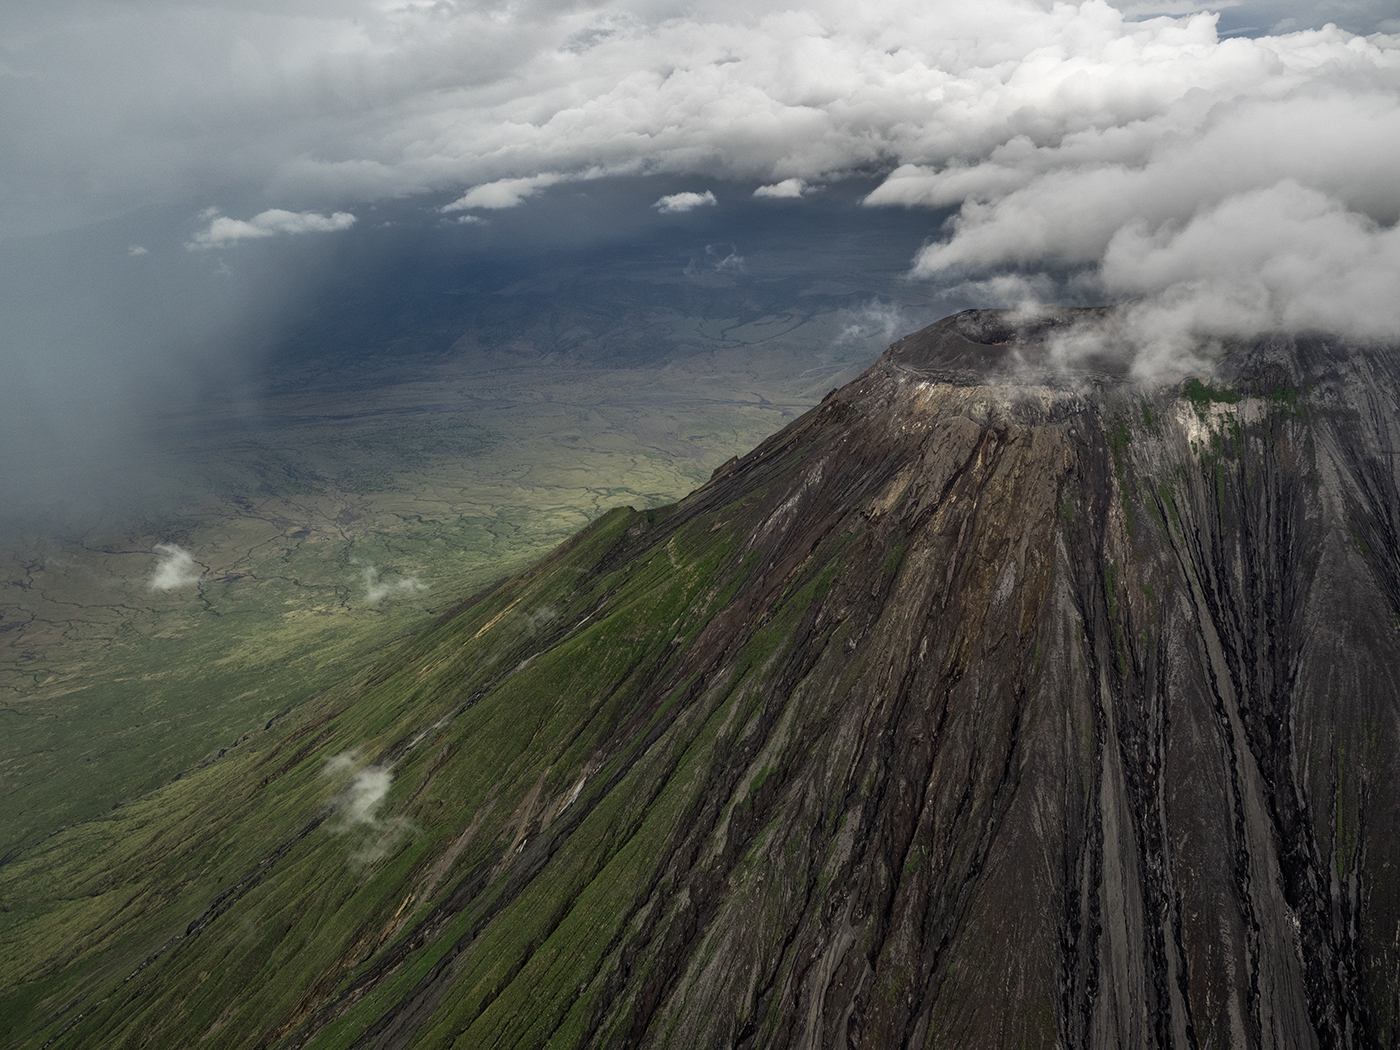 Near Arusha, Tanzania, the active volcano, Ol Doinyo Lengai, "Mountain of God" in the Maasai language